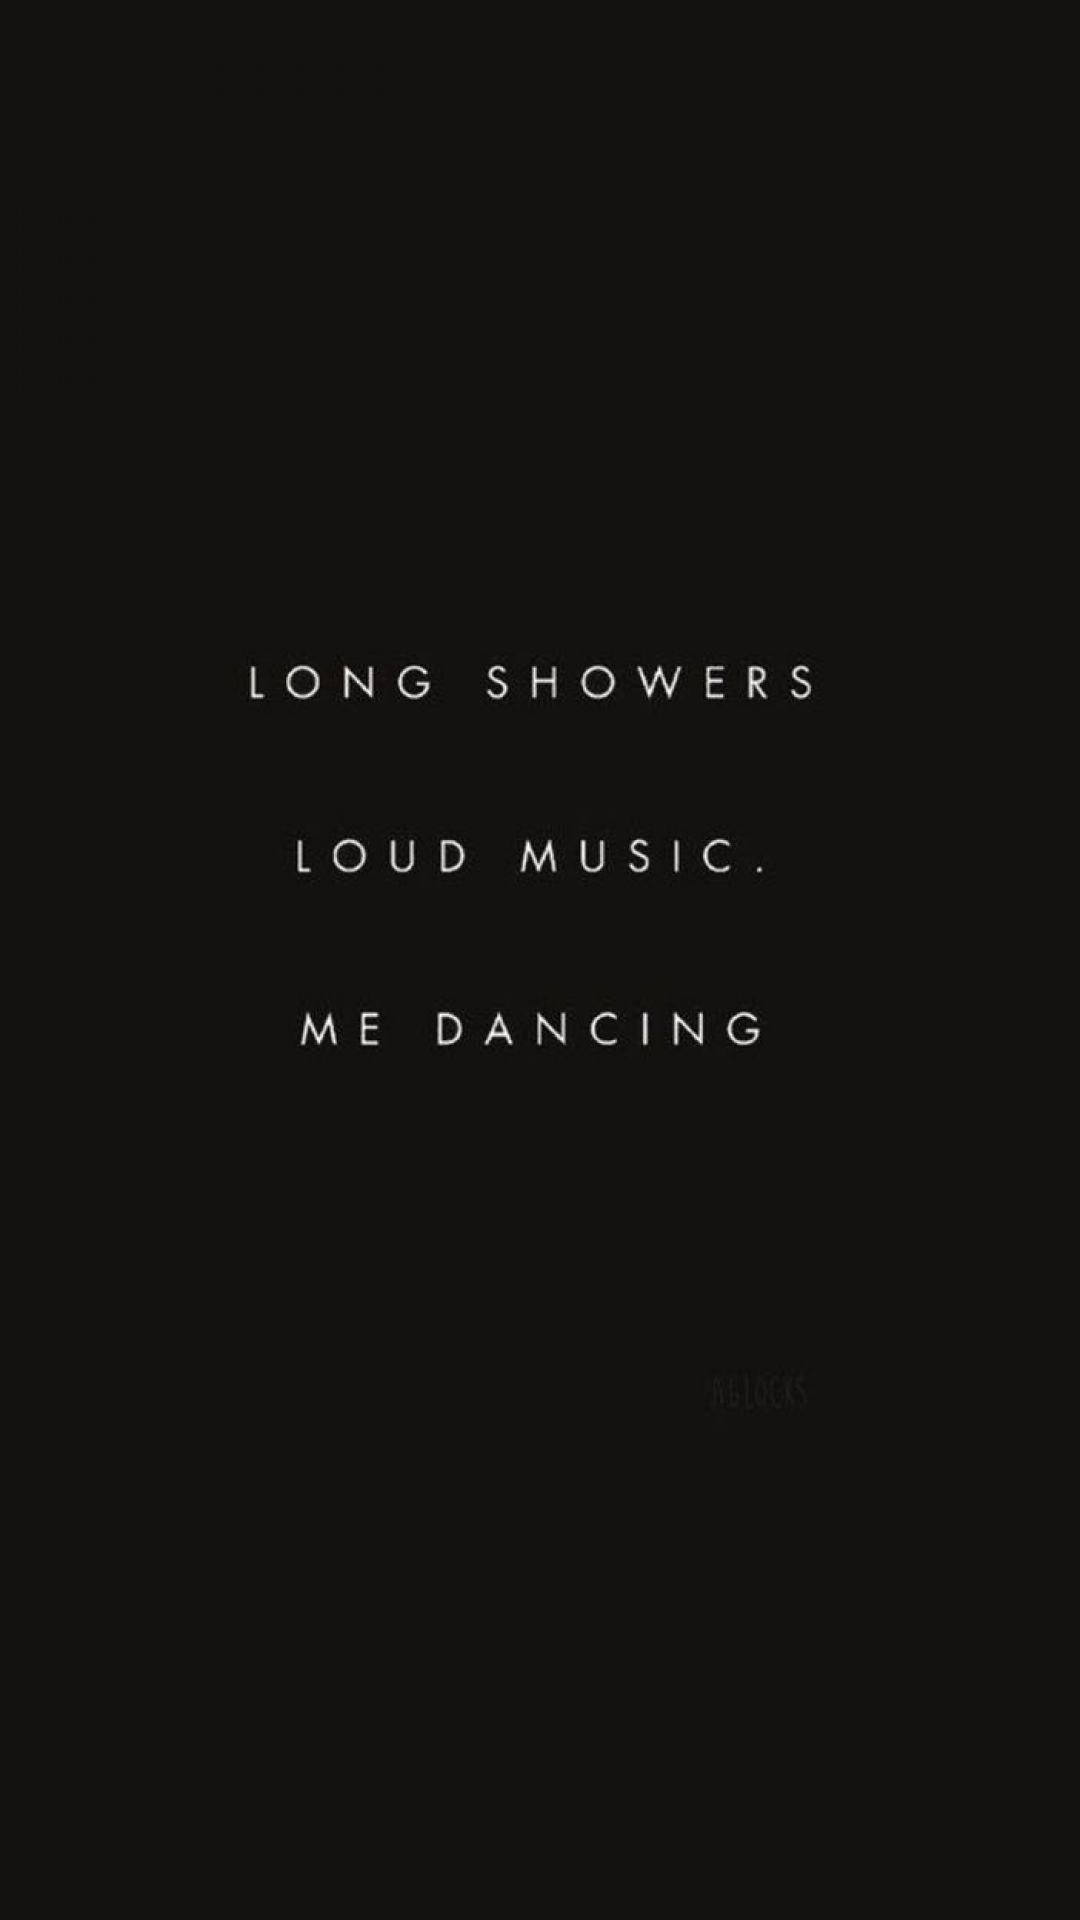 Long showers, loud music, me dancing. - Black quotes